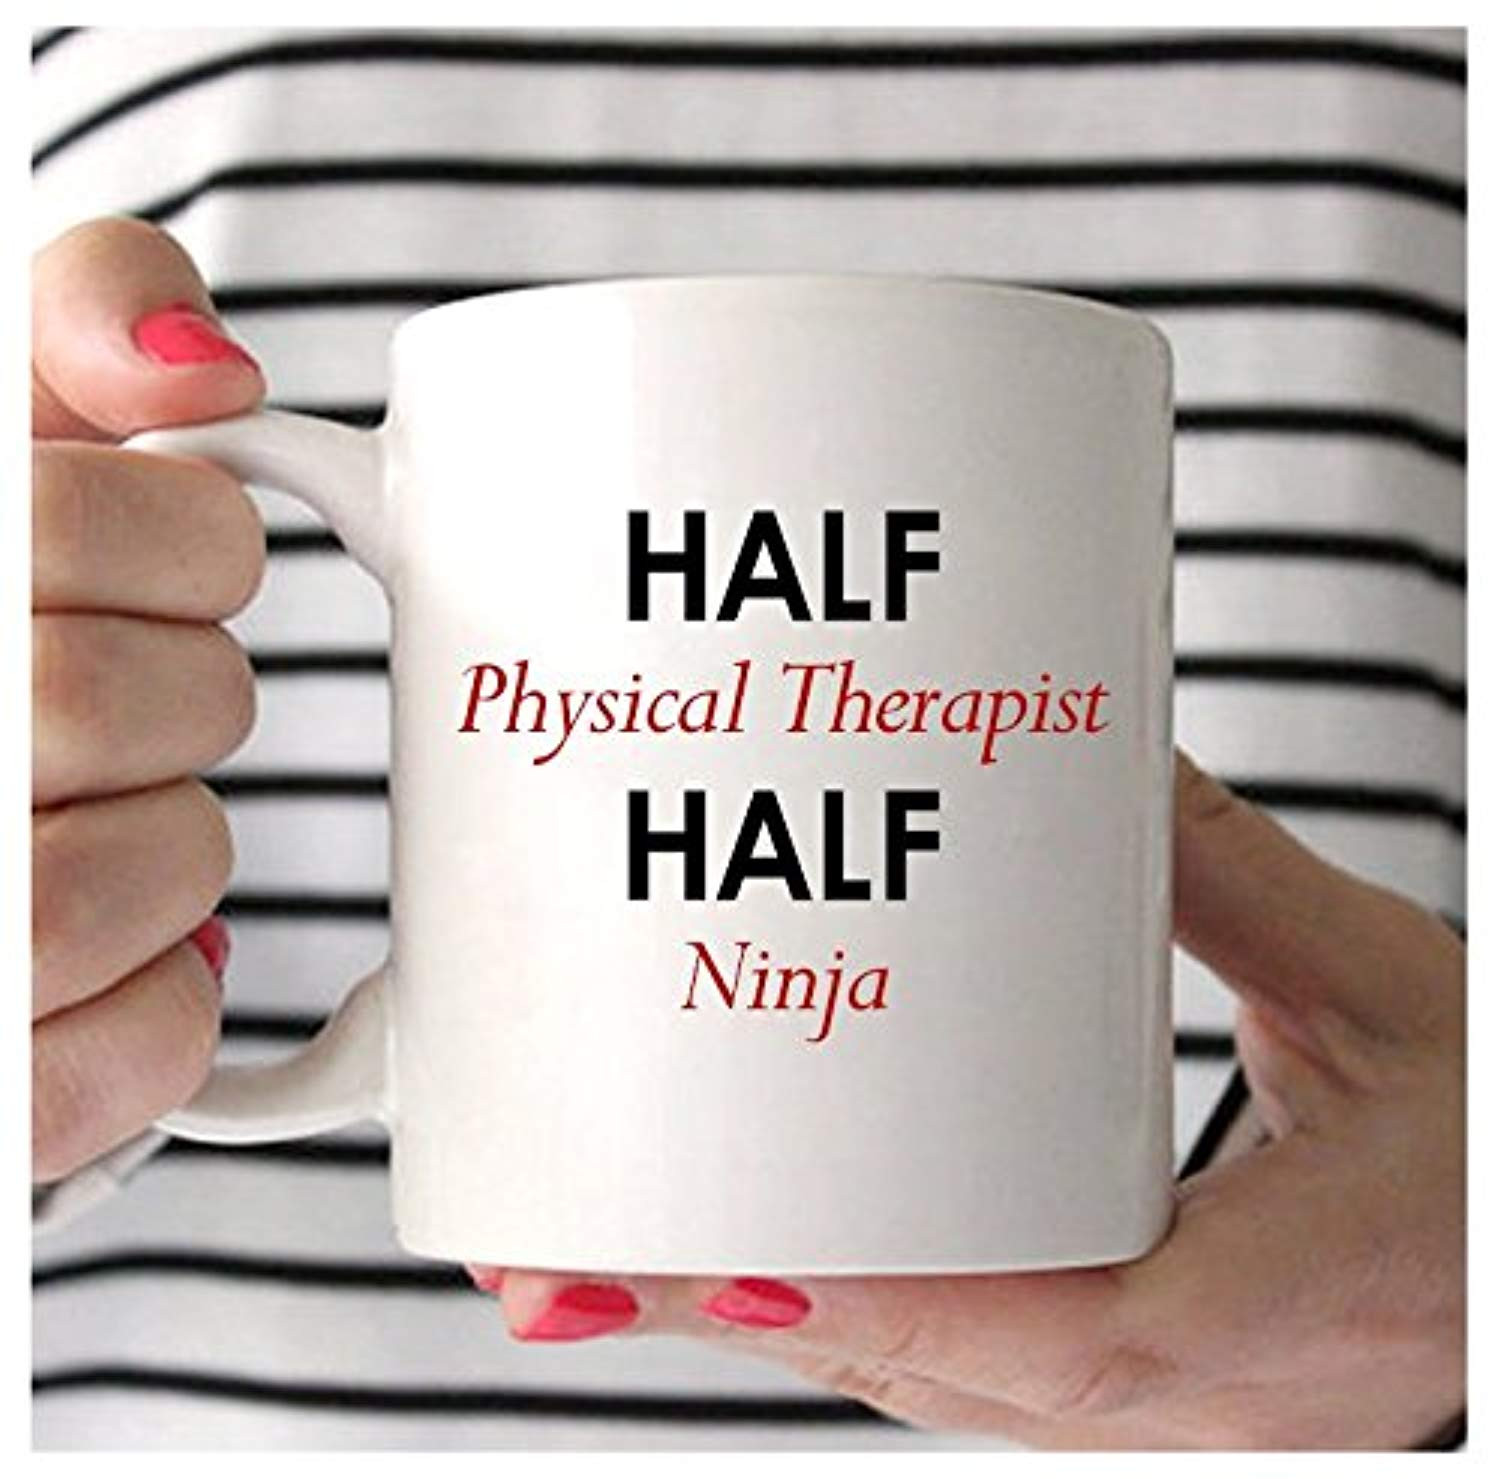 Best ideas about Physical Therapist Gift Ideas
. Save or Pin Physical Therapist Mug Half Physical Therapist Half Ninja Now.